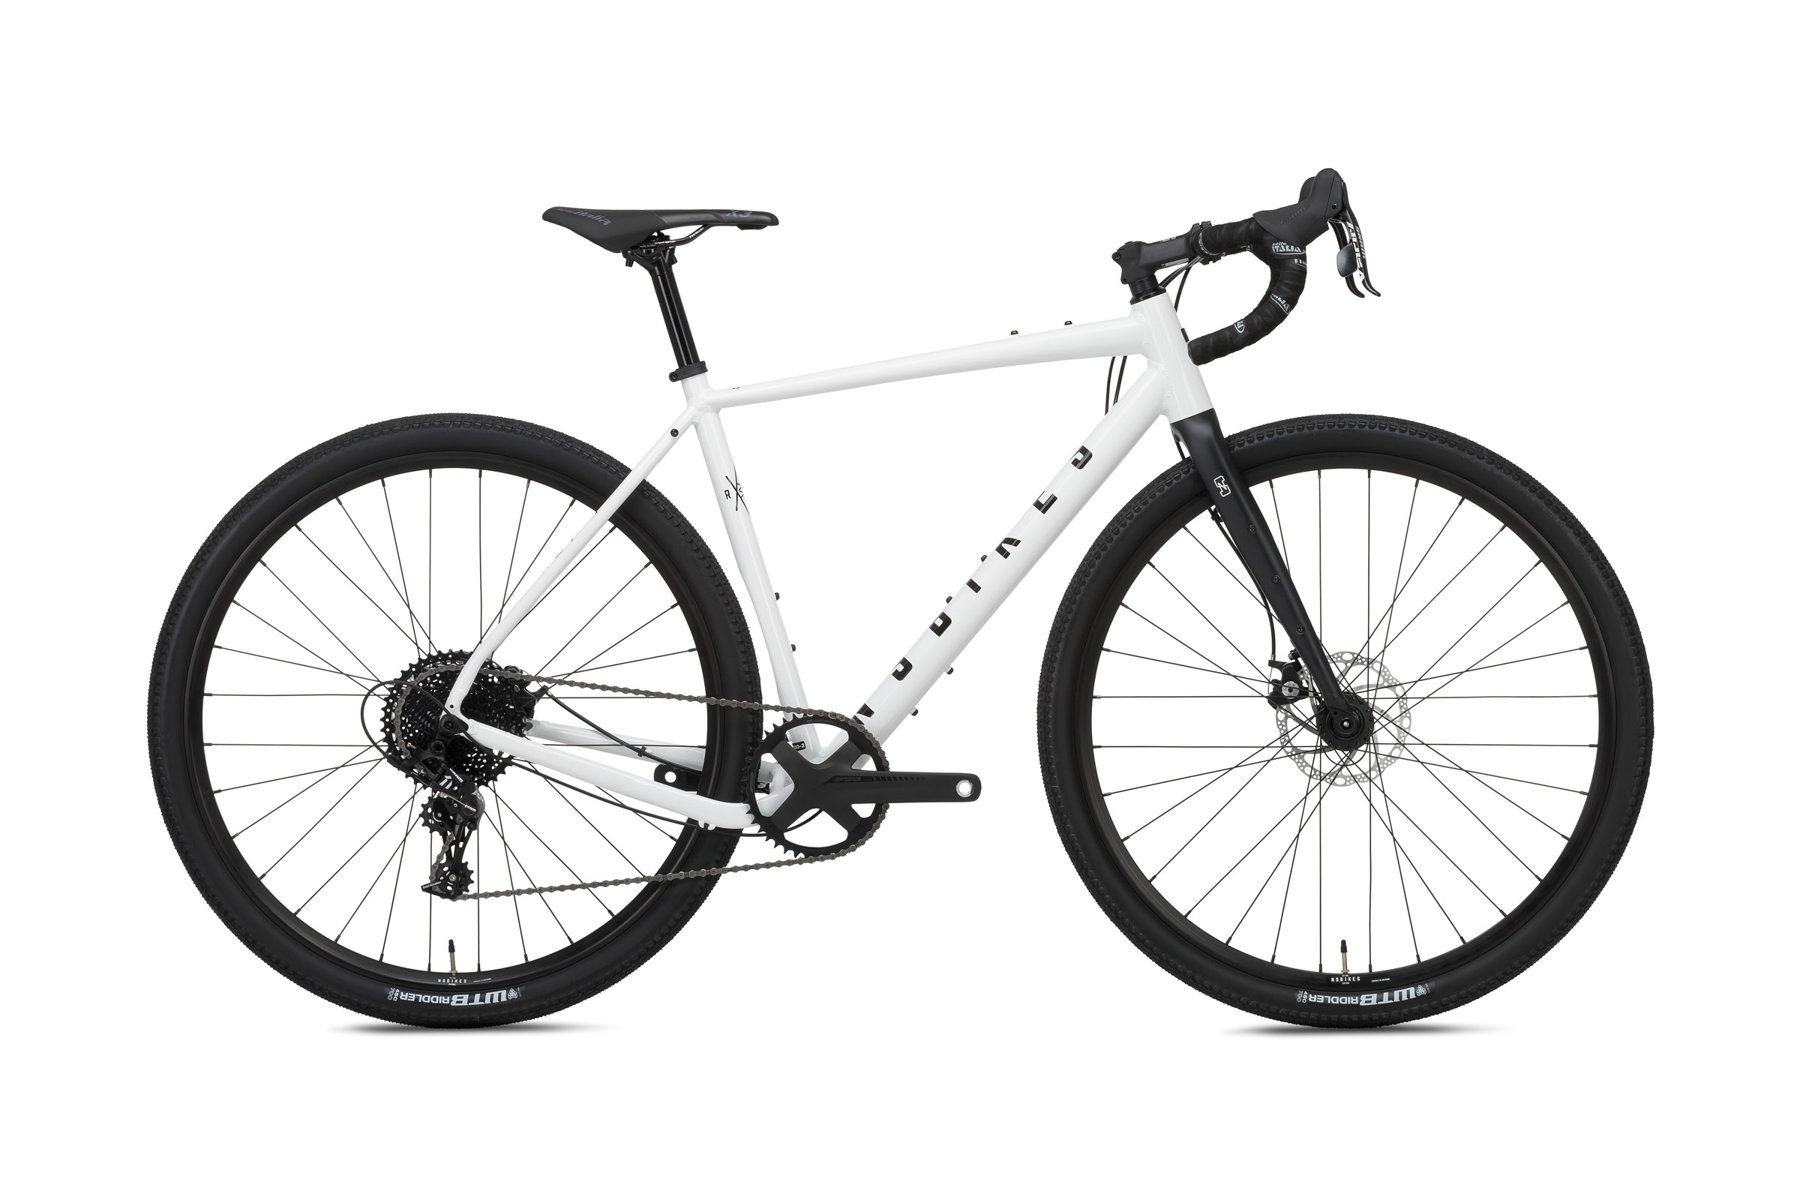 Rower NS Bikes RAG+ 3 28'' Biały